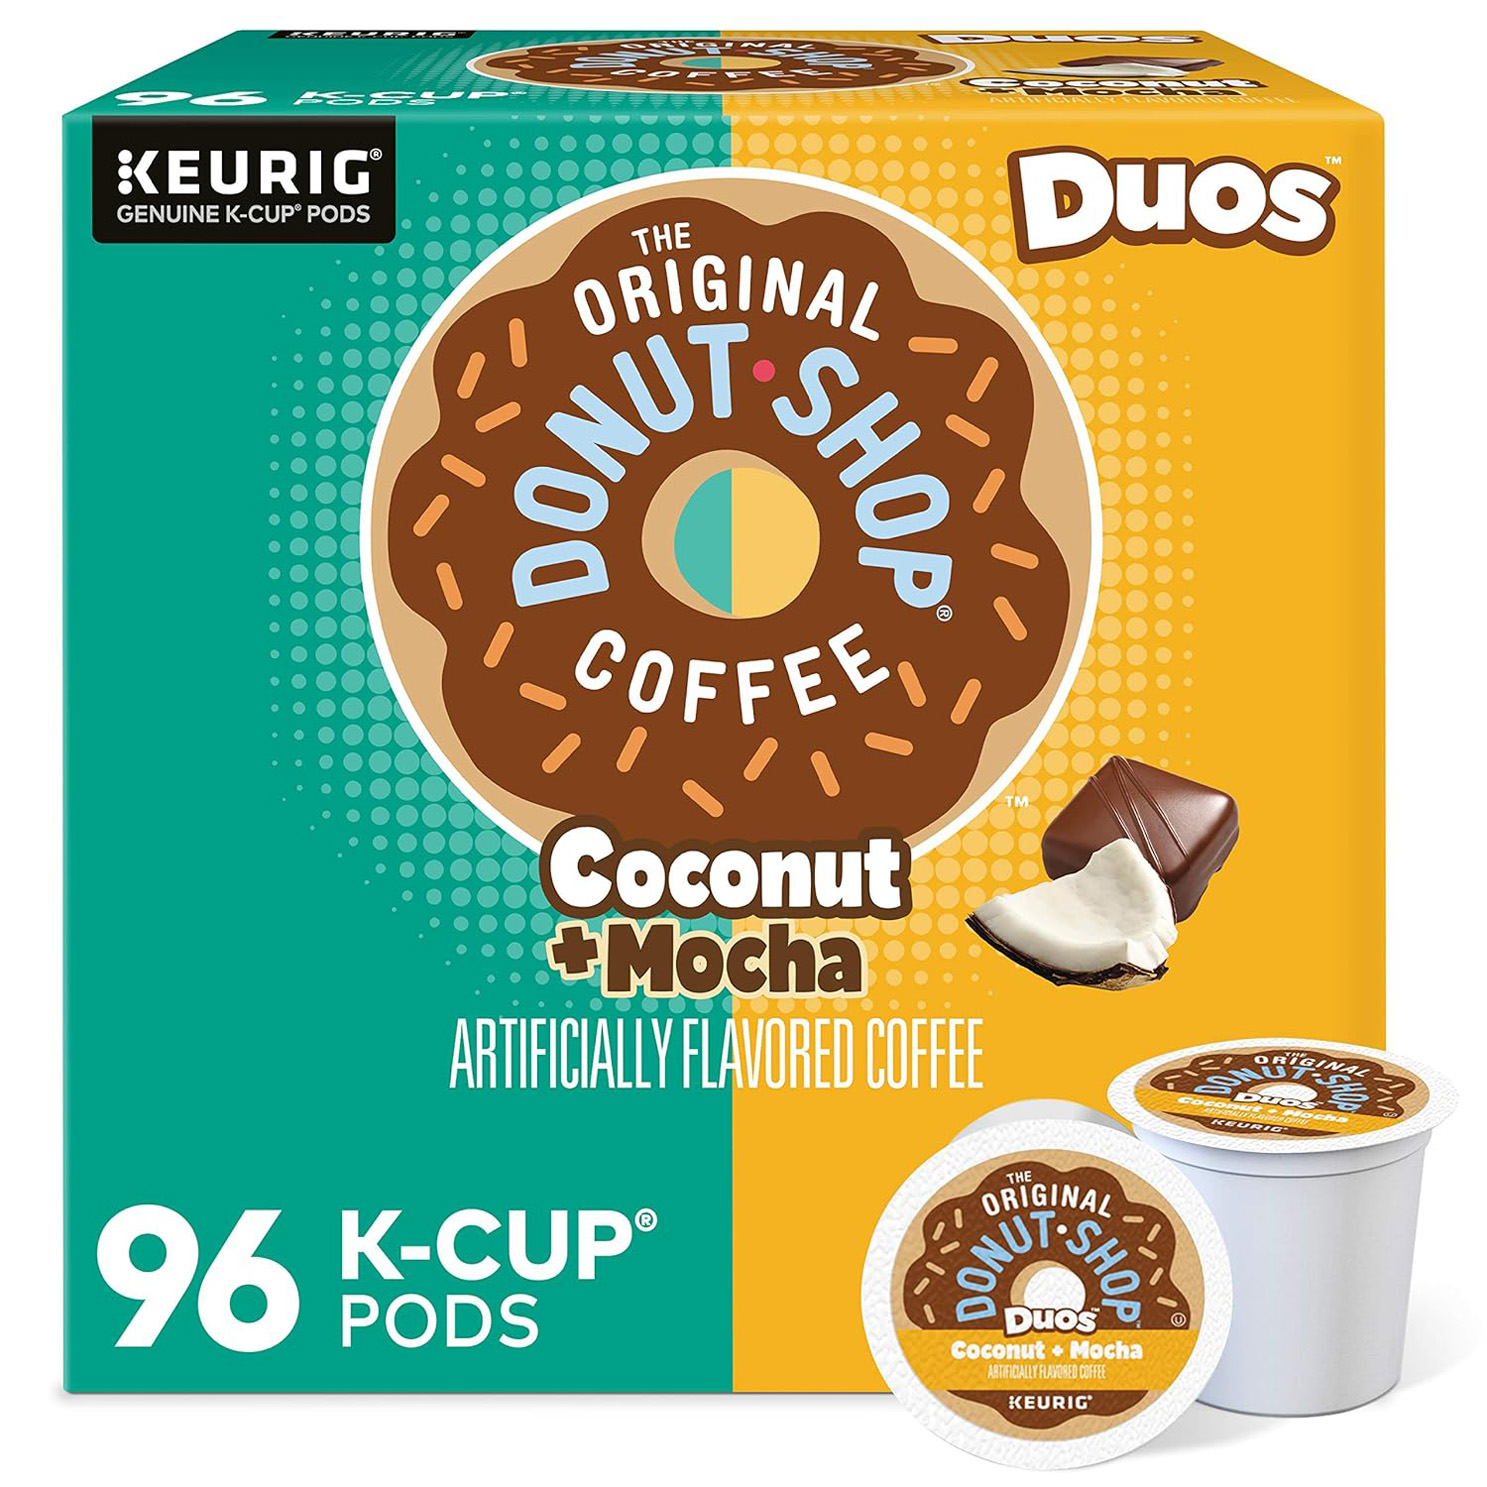 The Original Donut Shop Duos Coconut + Mocha Keurig Single-Serve K-Cup Pods, Medium Roast Coffee, 96 Count